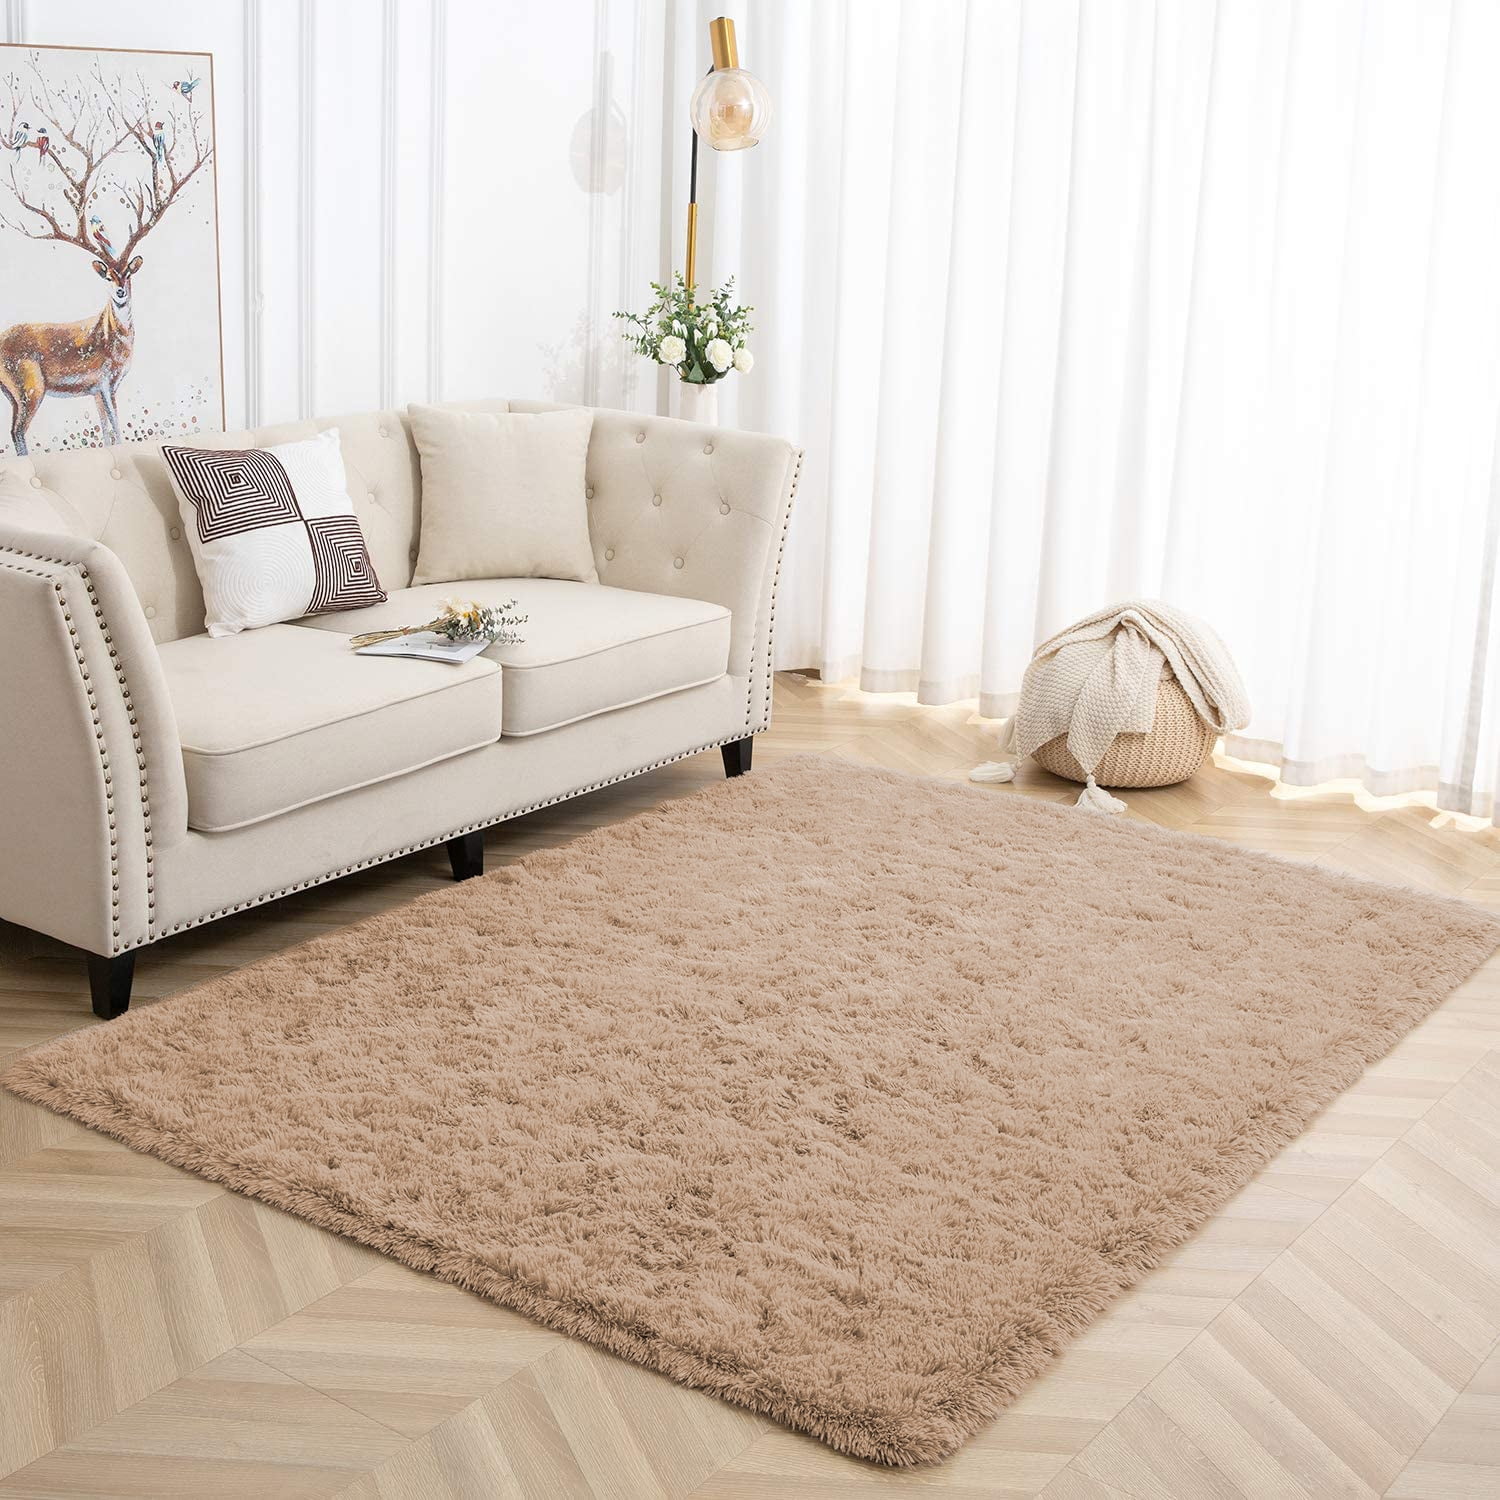 Belleze Parma Luxury Ultra Soft Fluffy Area Rug Modern Indoor Shaggy Plush Fluffy Nursery Rugs Floor Carpet for Home Decor Living Room Bedroom 5x8